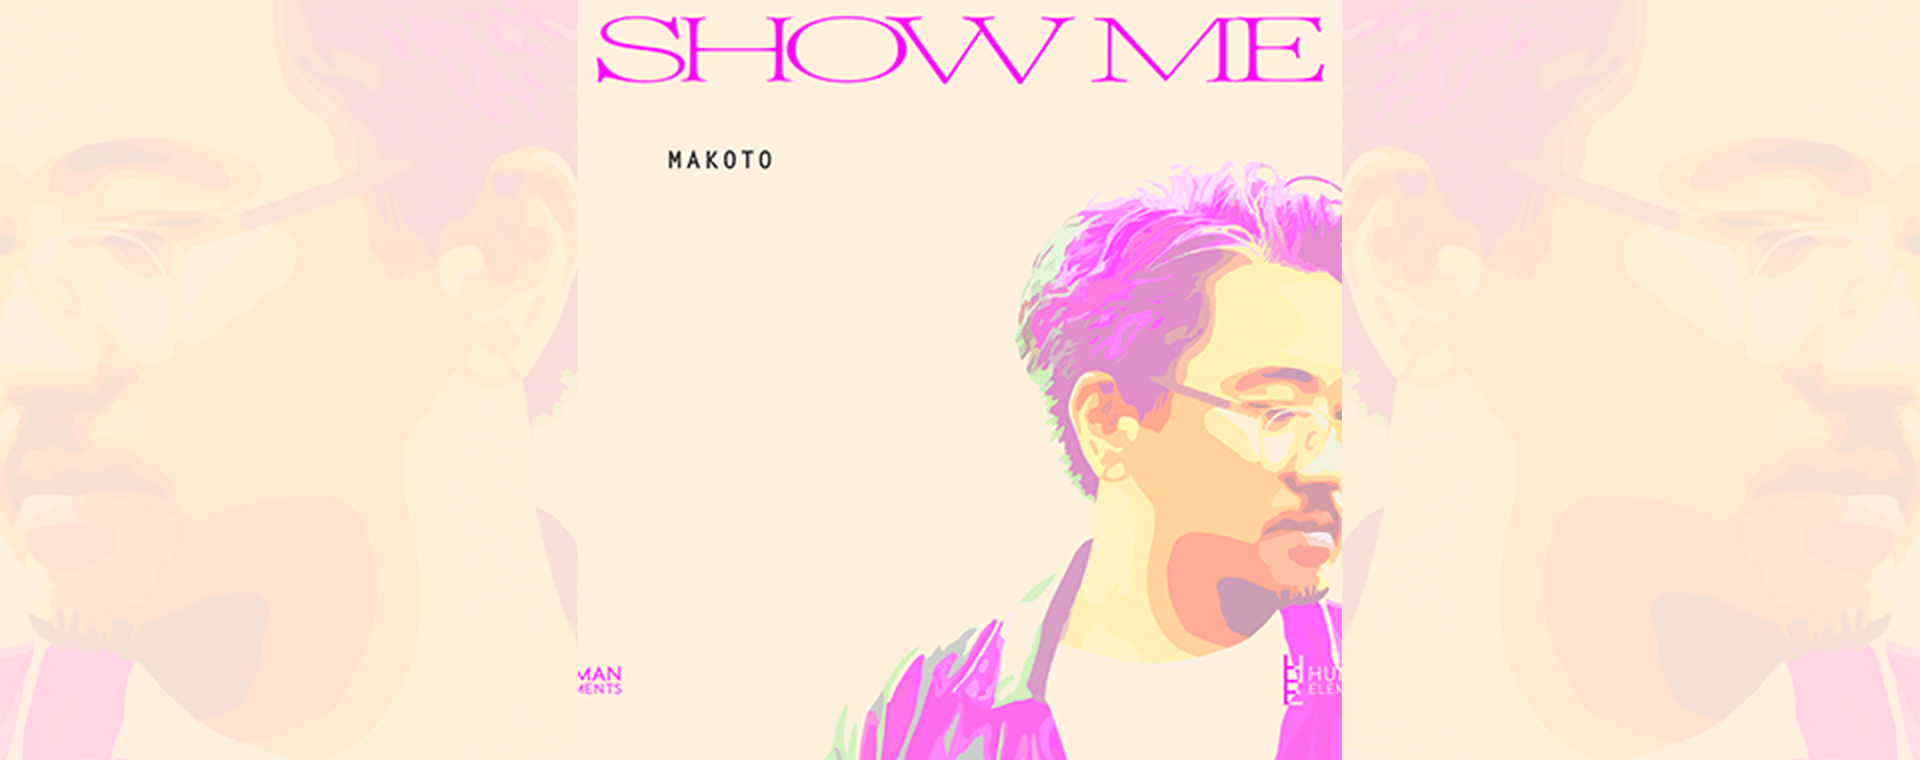 MAKOTO - Show Me